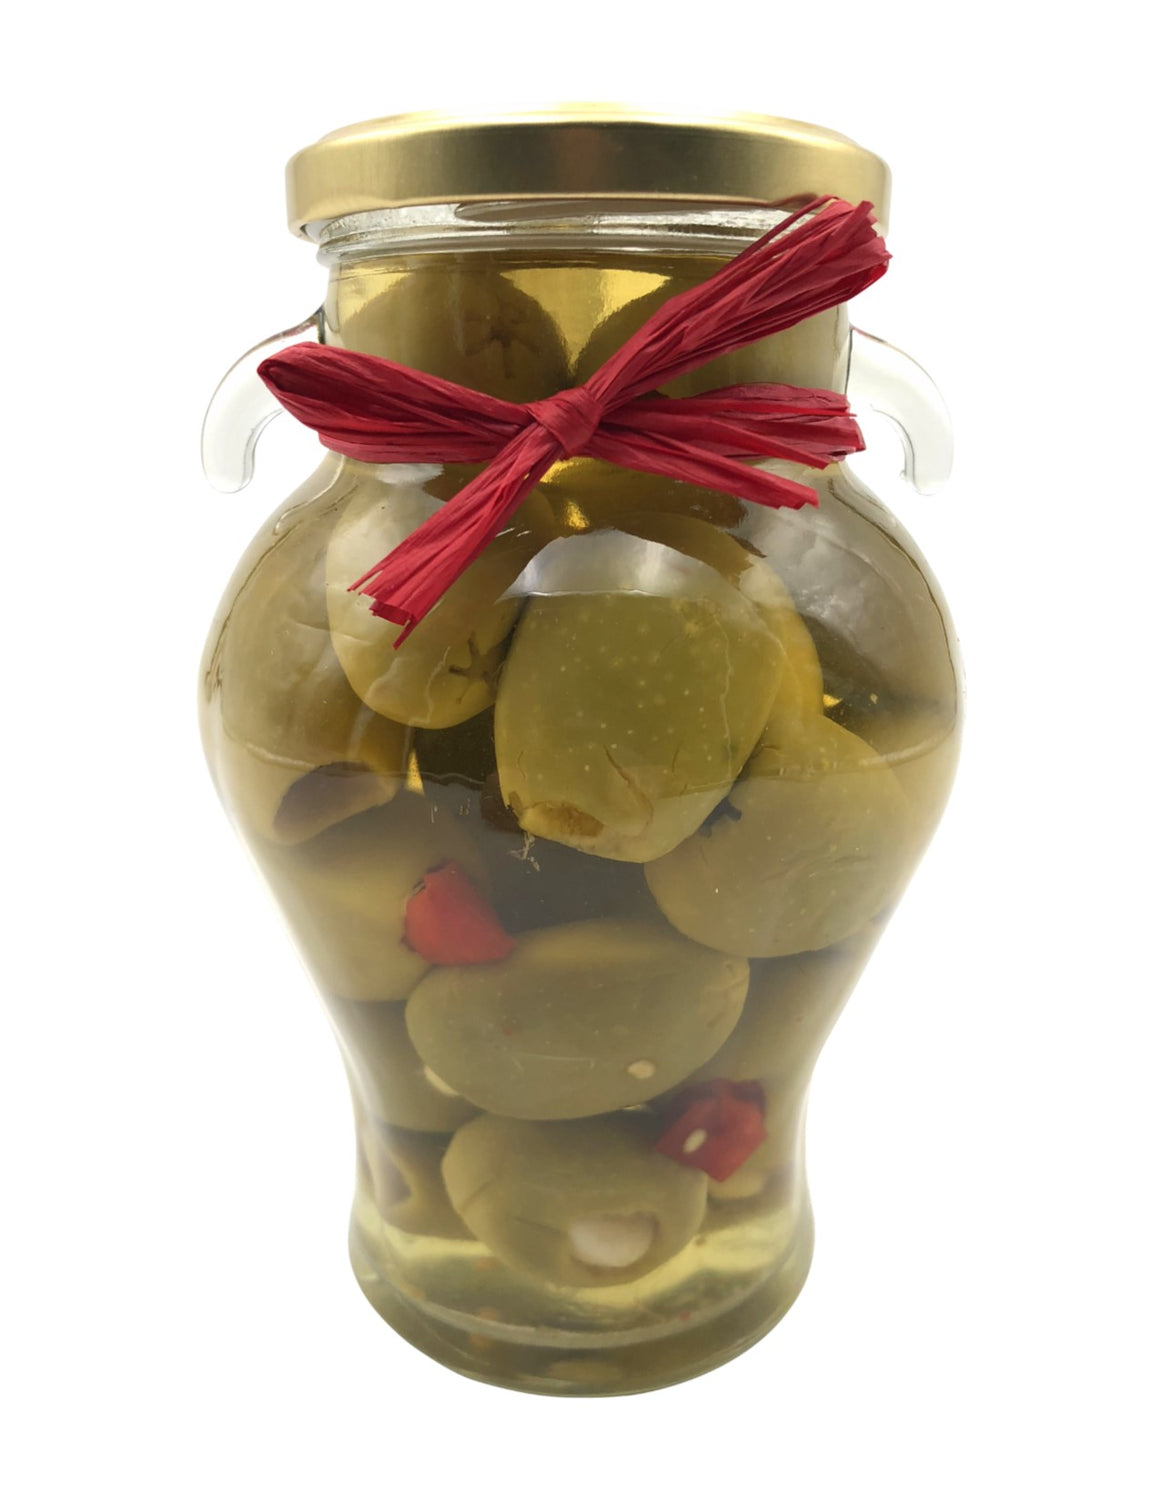 Delizia Garlic & Red Chili Stuffed Gordal Olives